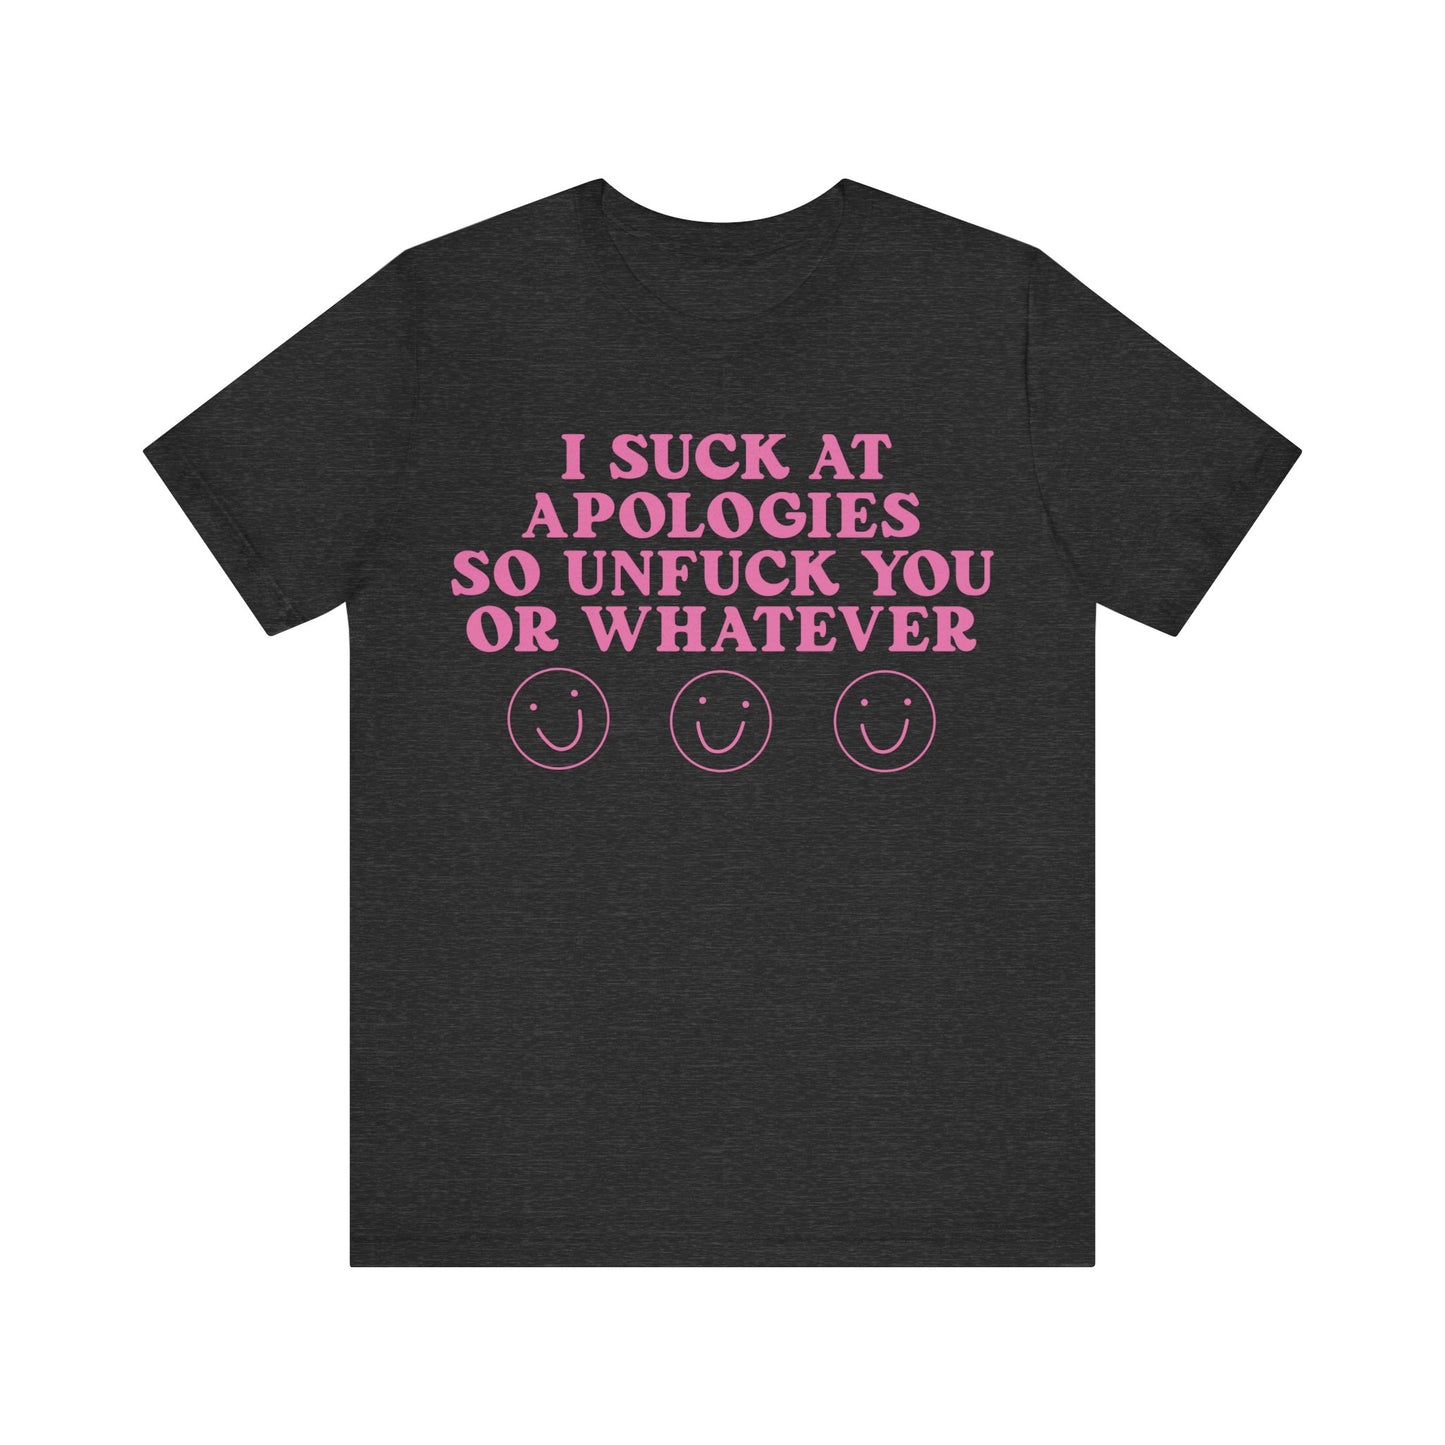 Suck at apologies T-shirt